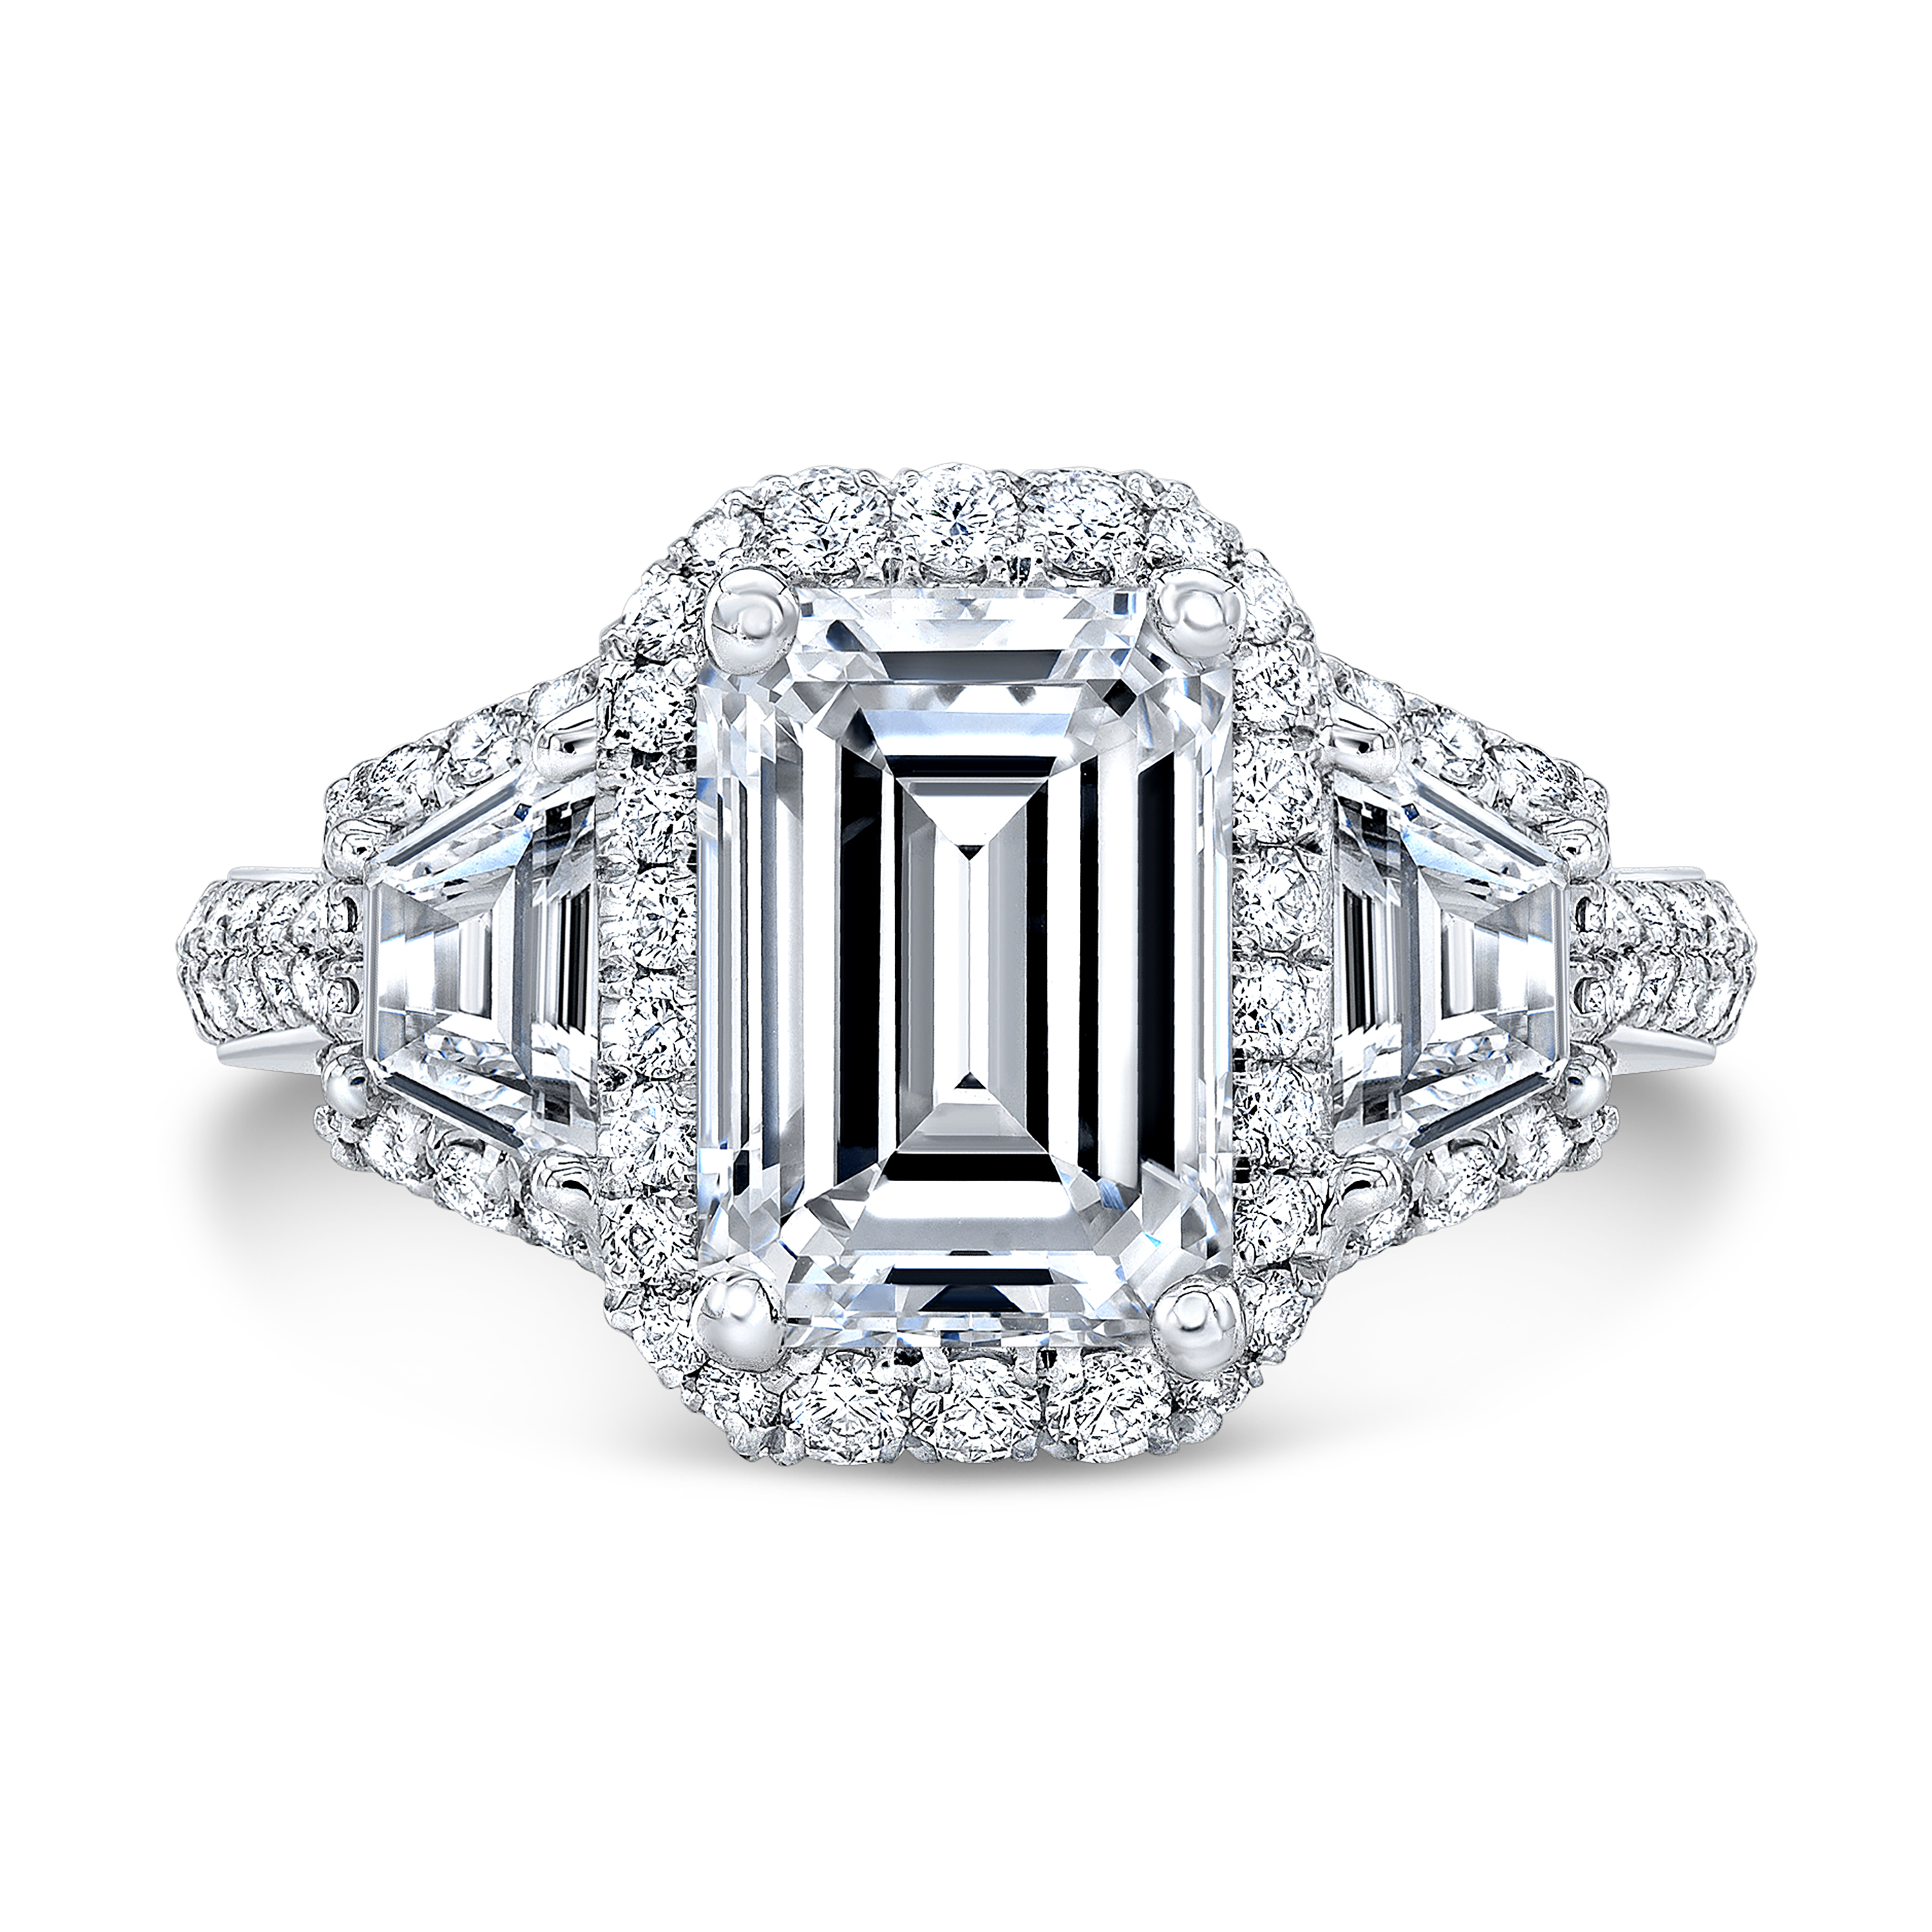 Certified 2.50 Ct White Emerald Cut Diamond Engagement Ring 14K White Gold